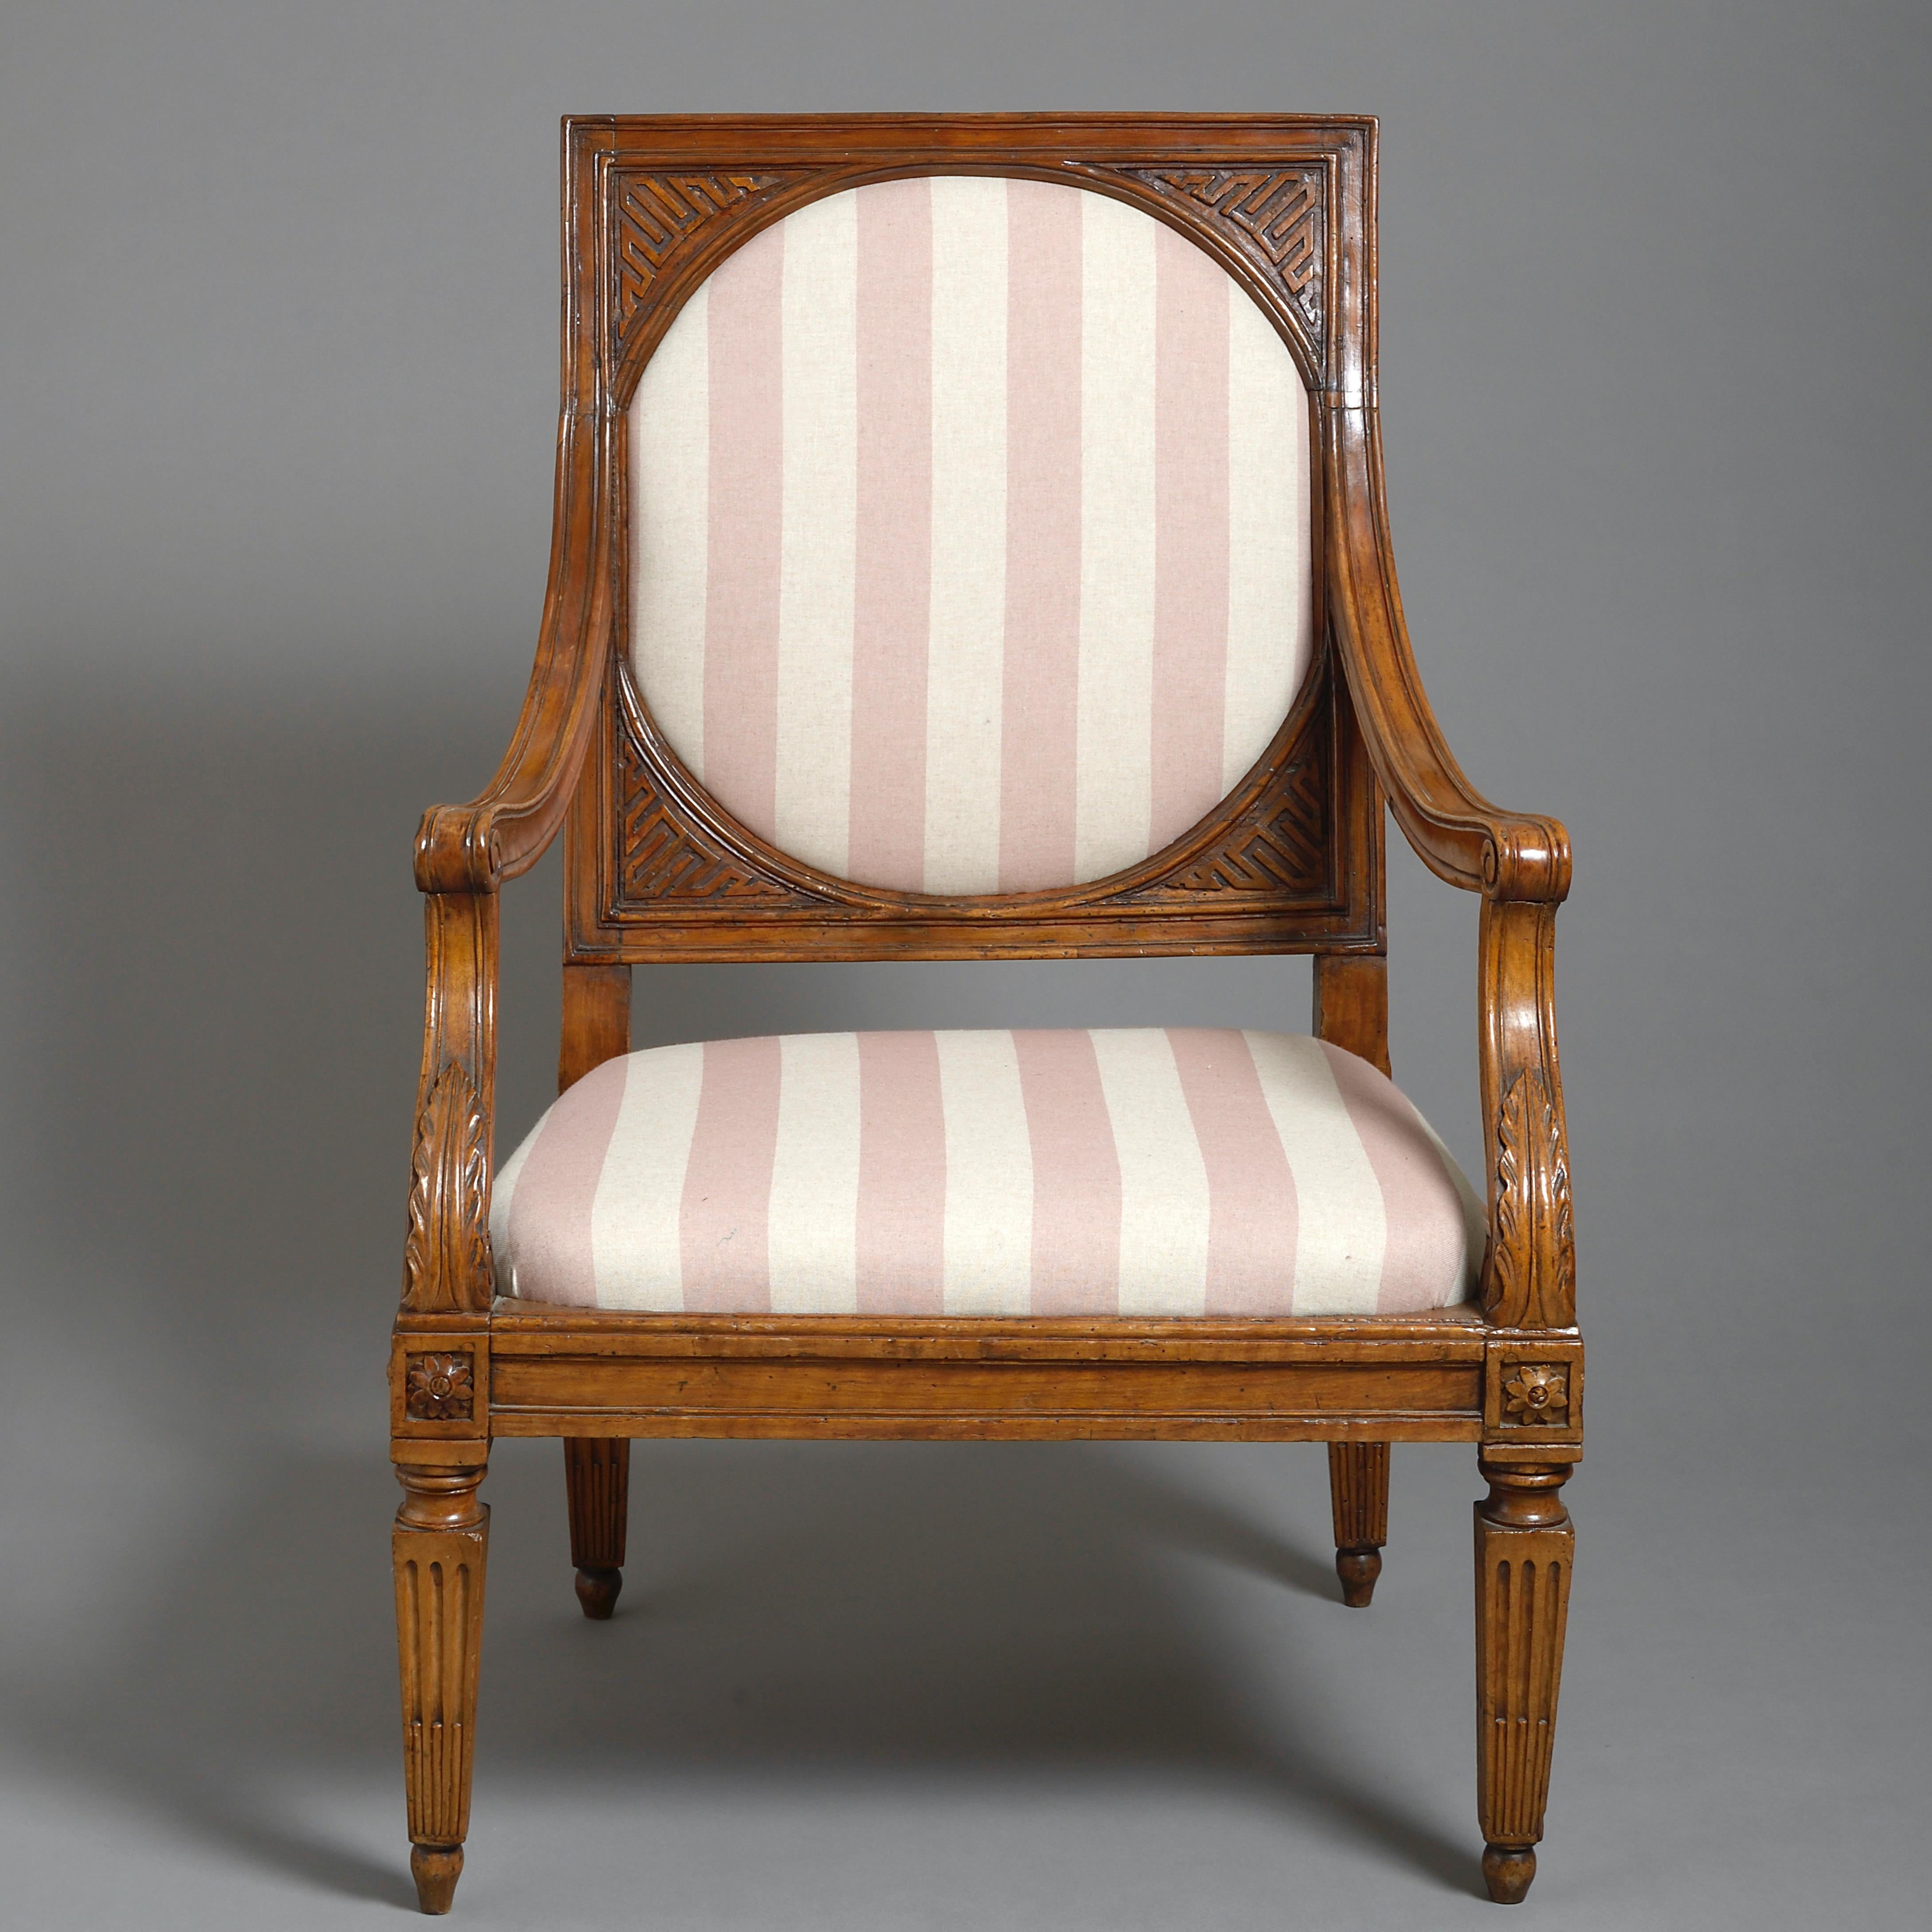 A large pair of North Italian walnut armchairs, circa 1780.